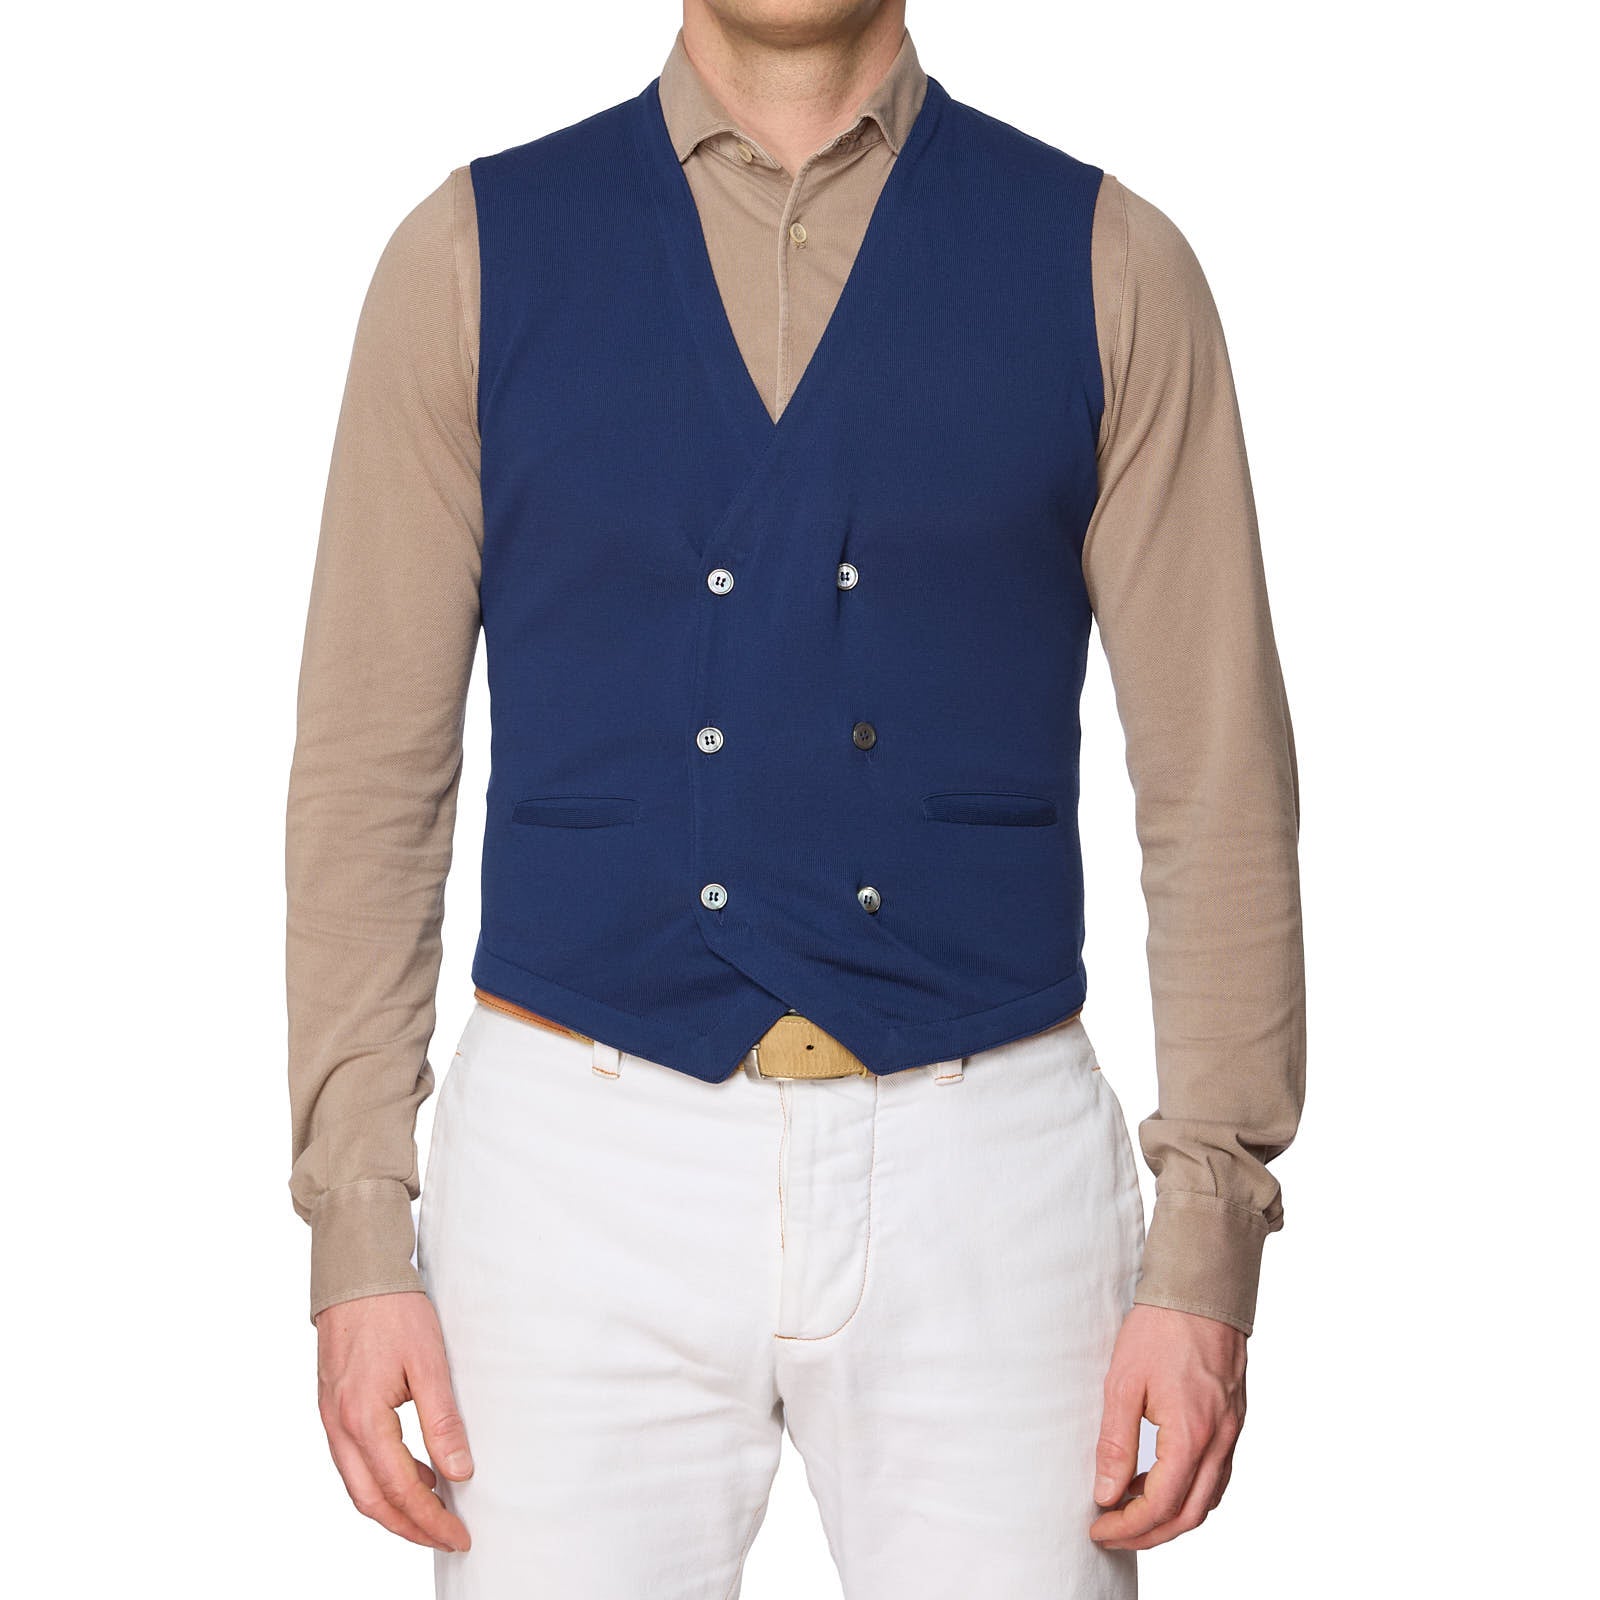 GRAN SASSO for VANNUCCI Navy Blue Cotton Knit DB Vest Waistcoat NEW